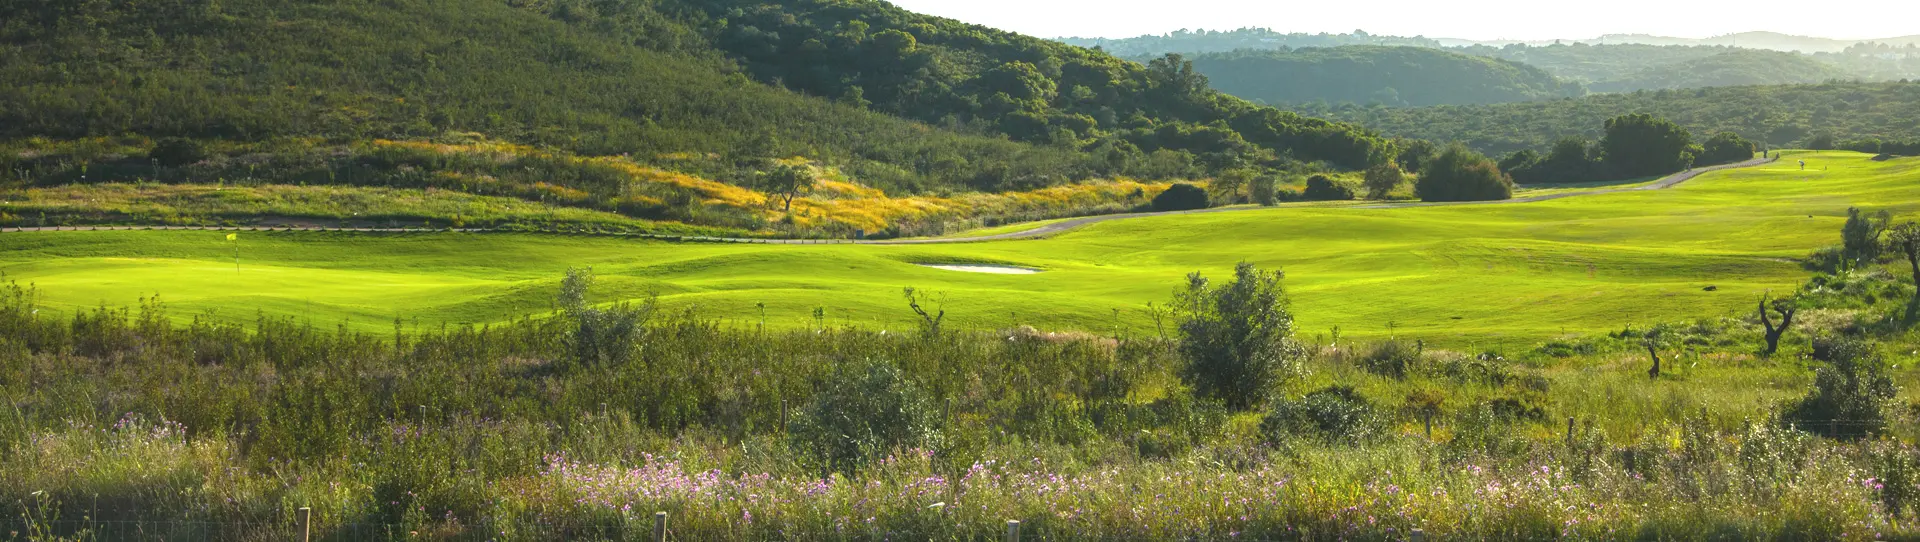 Portugal golf courses - Alamos Golf Course - Photo 1